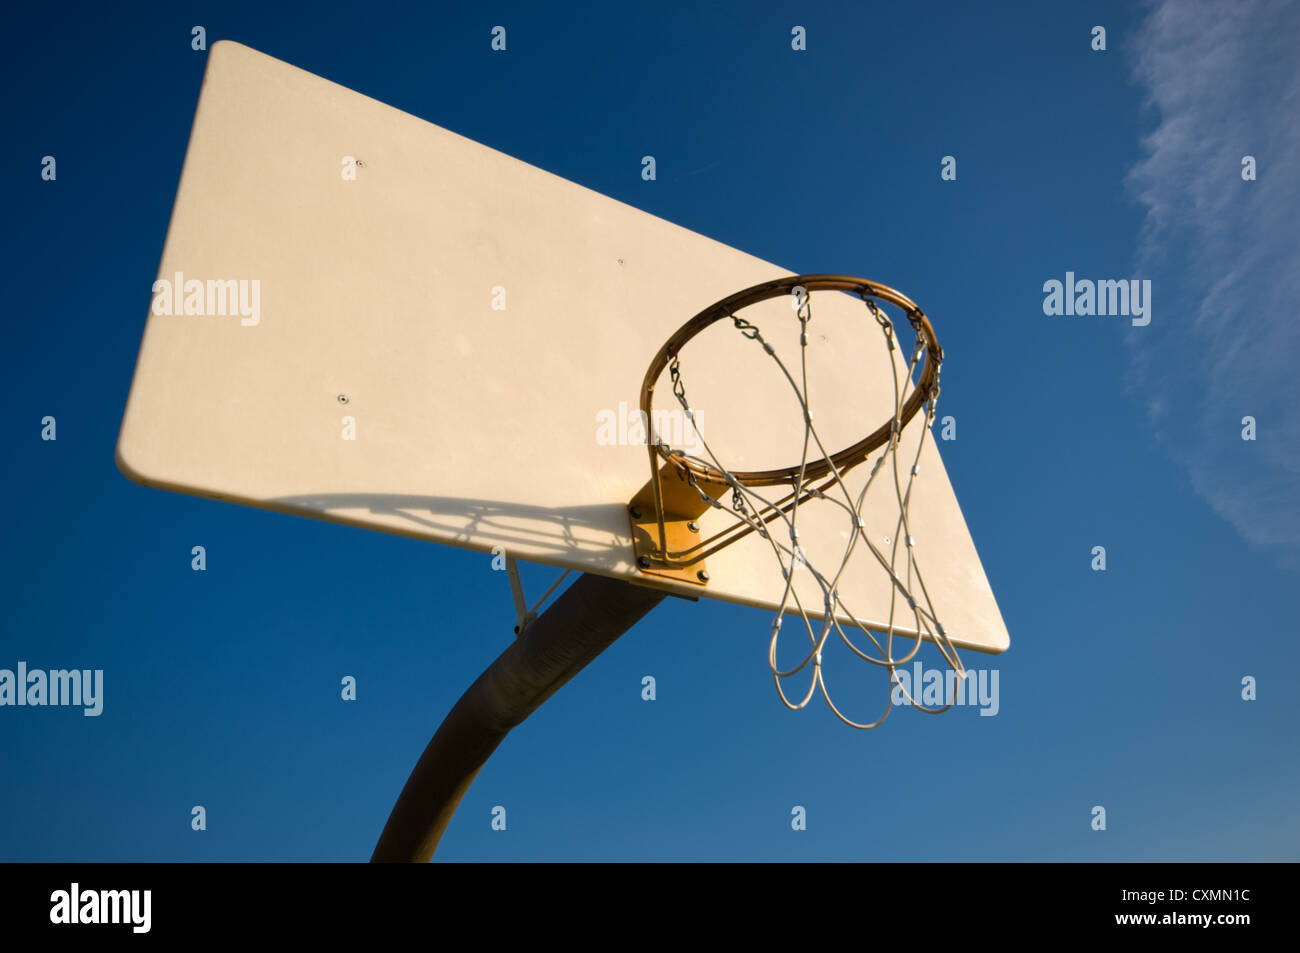 Panier de basket-ball avec un fond bleu ciel Banque D'Images